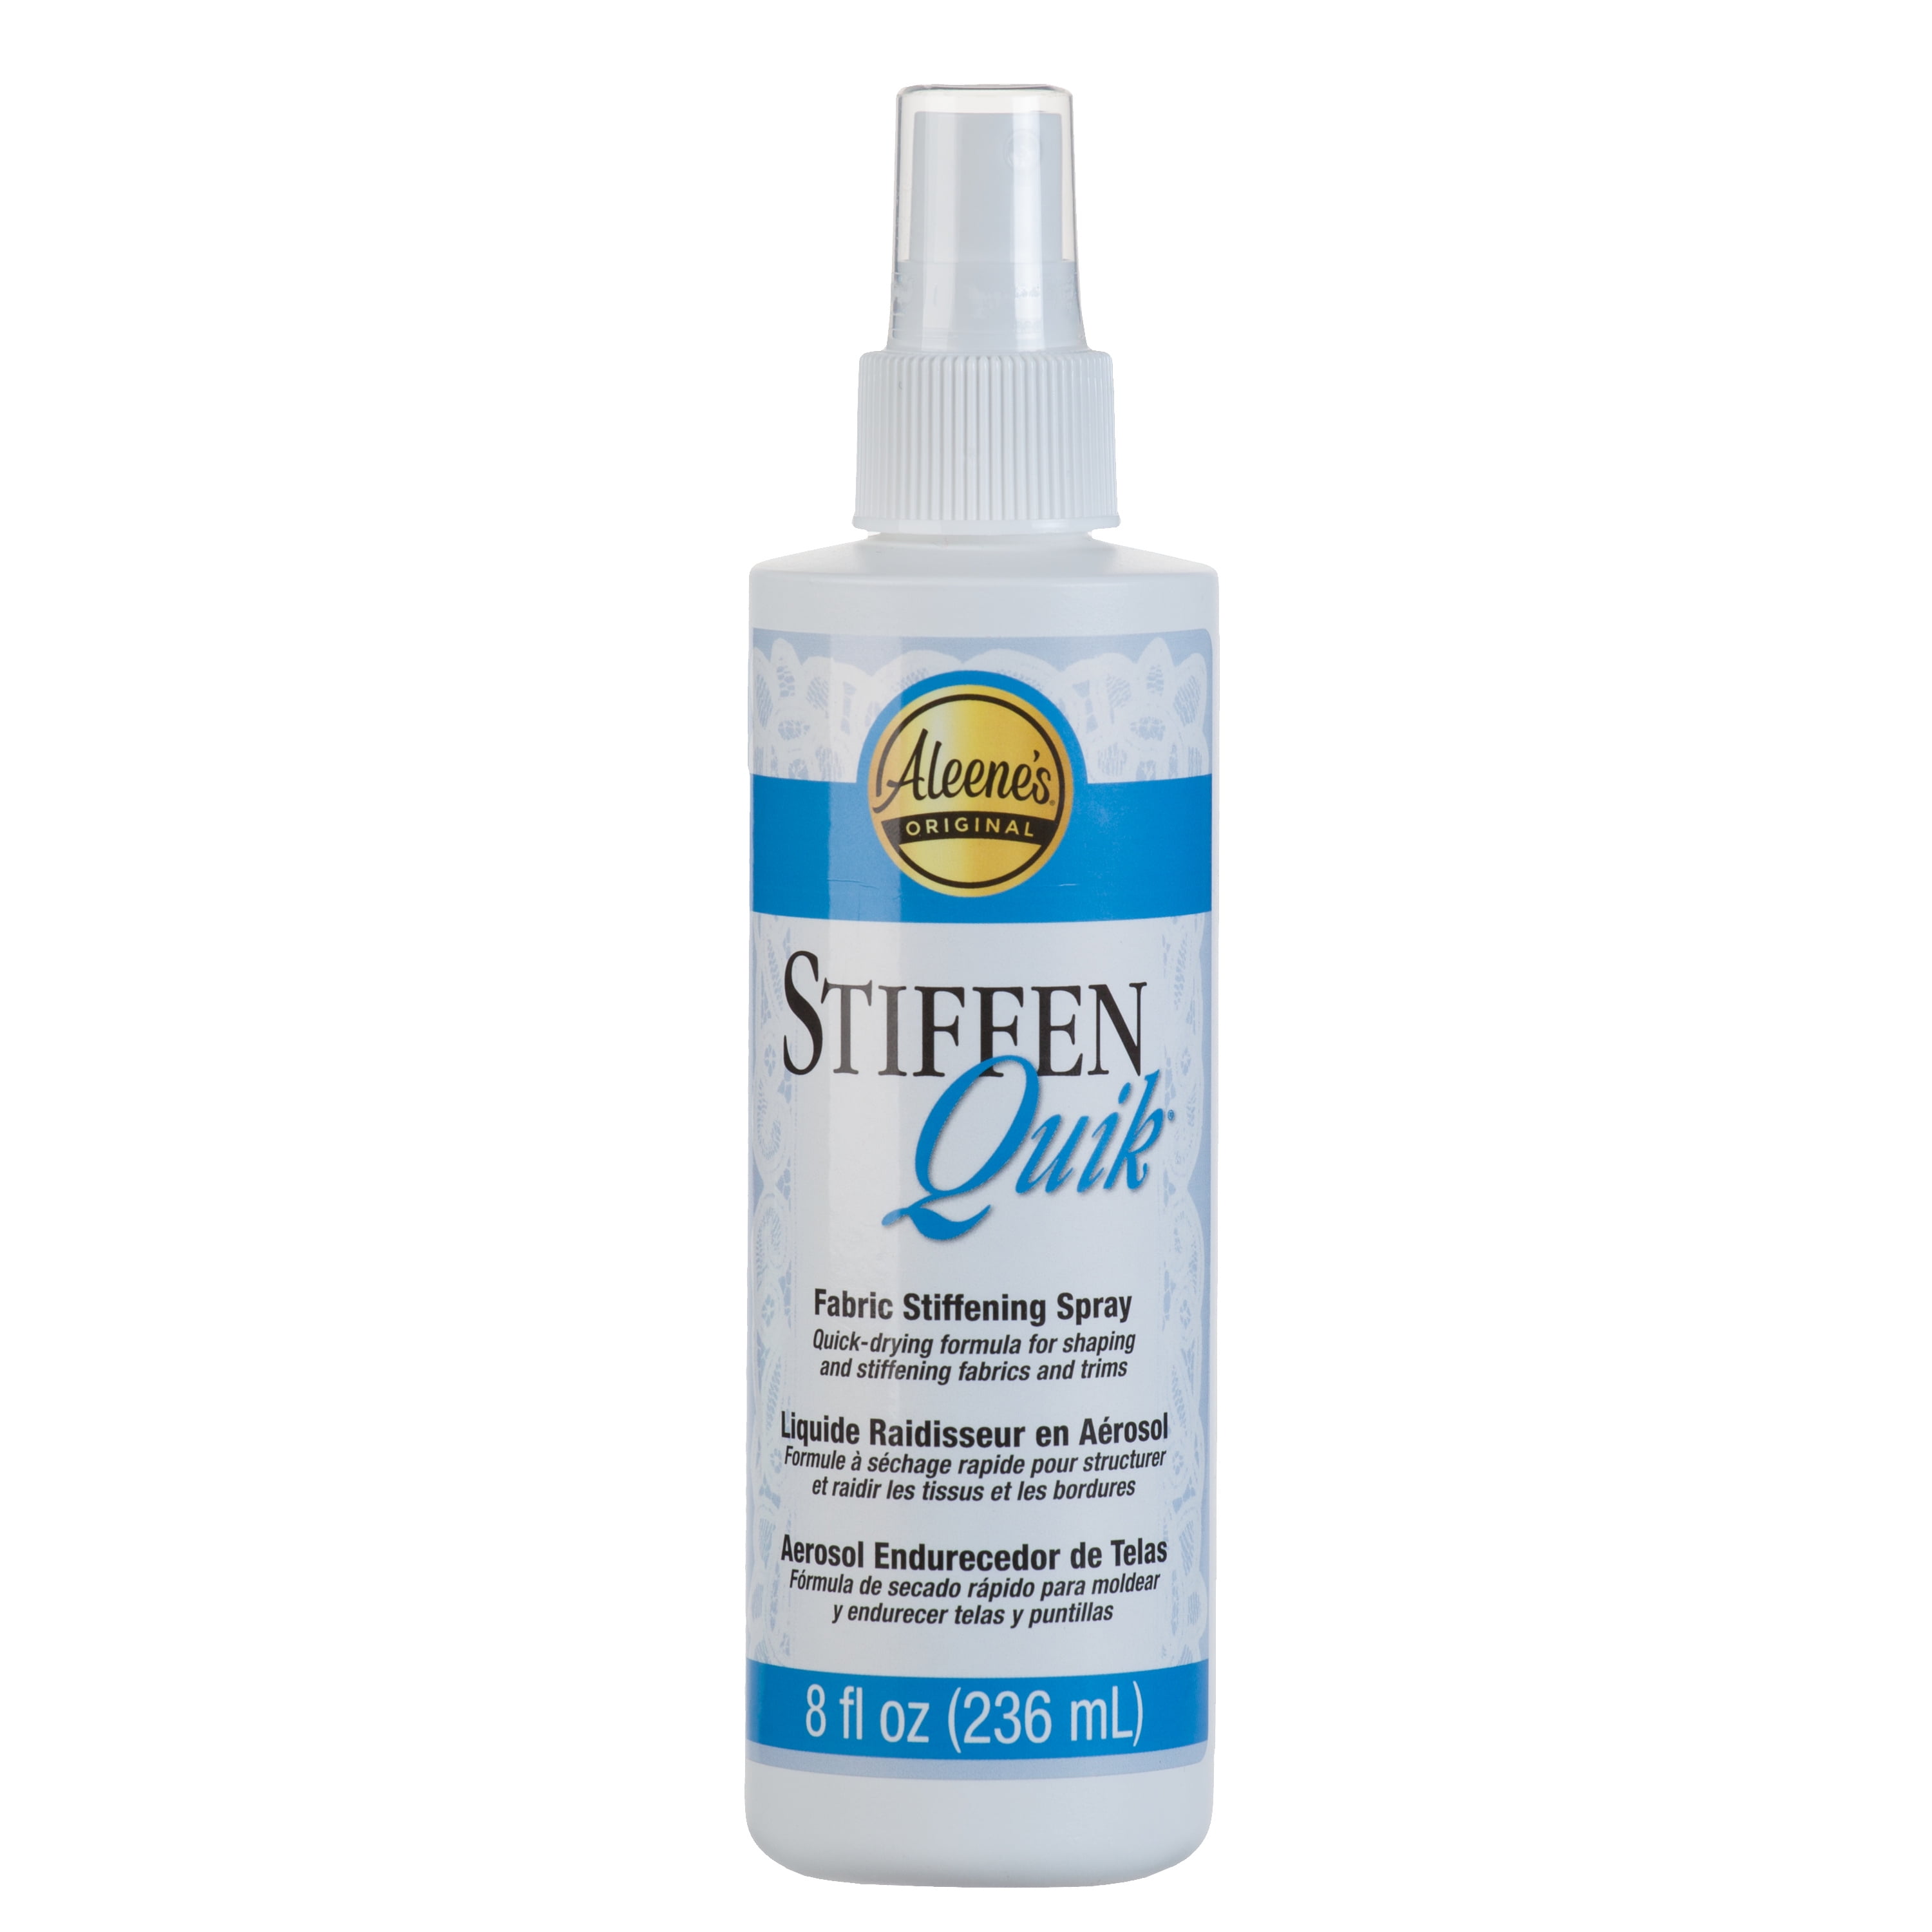 fabric stiffener spray - Buy fabric stiffener spray at Best Price